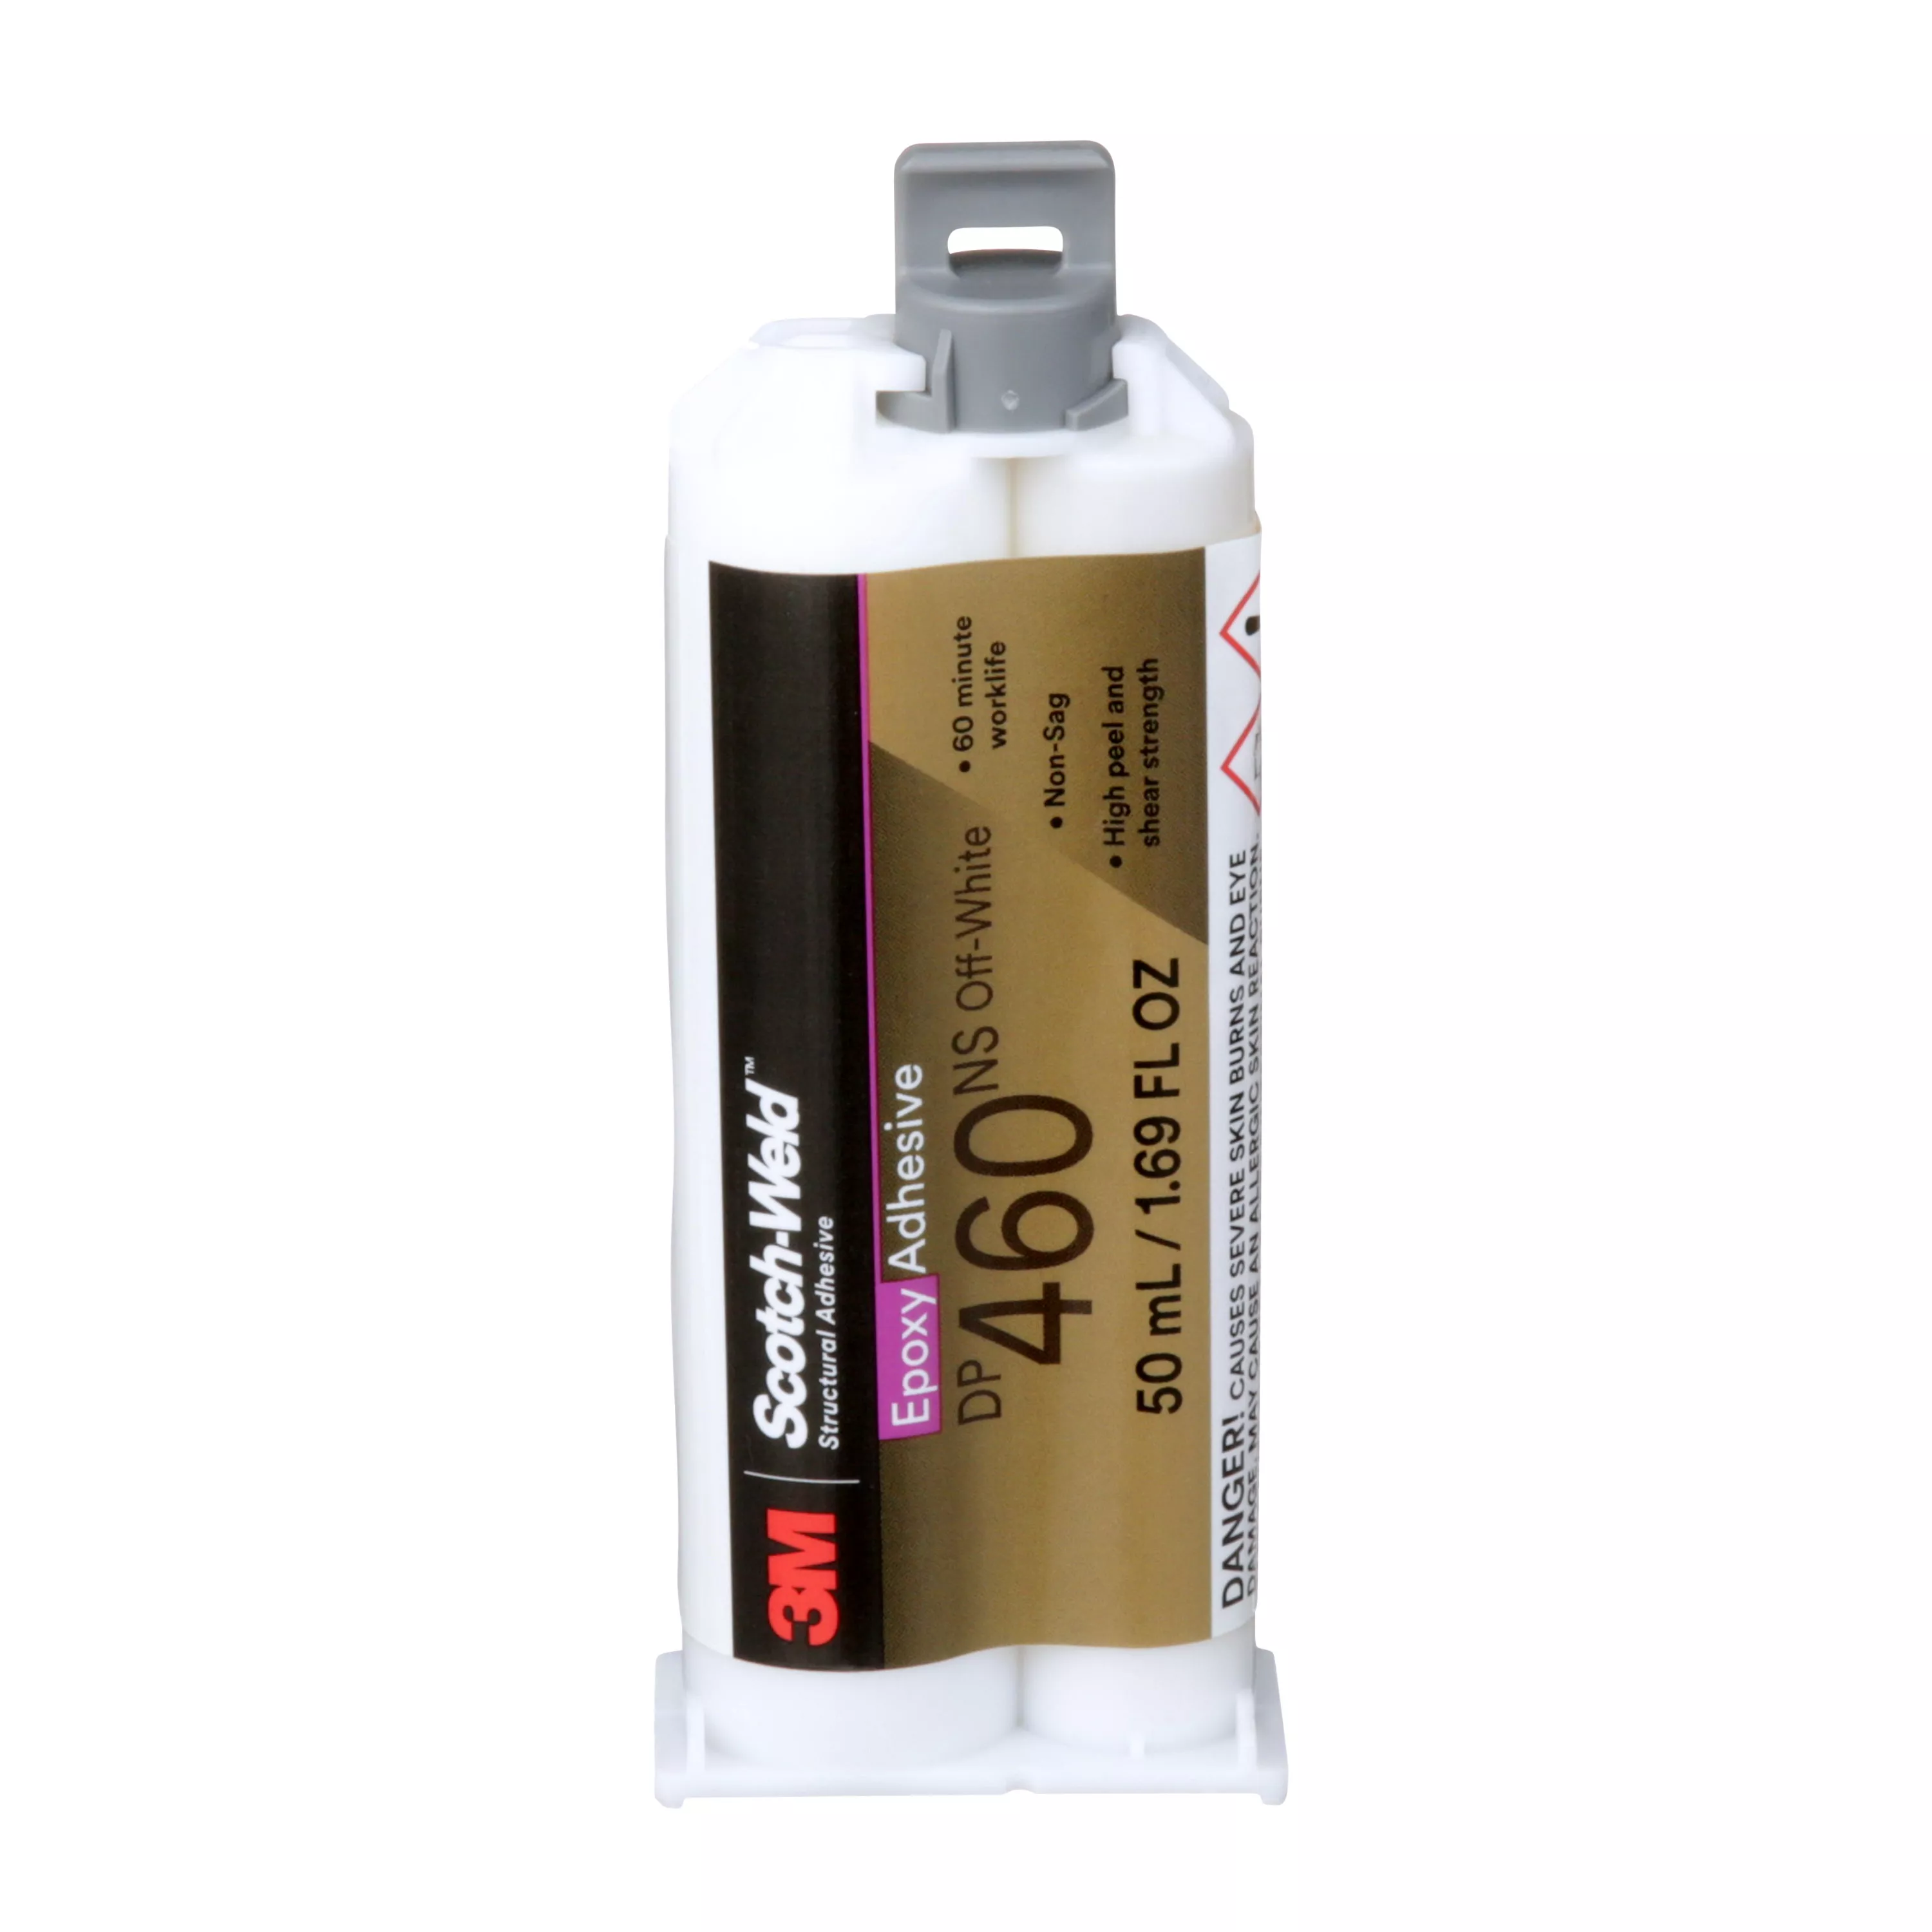 3M™ Scotch-Weld™ Epoxy Adhesive DP460NS, Off-White, 50 mL Duo-Pak,
12/Case